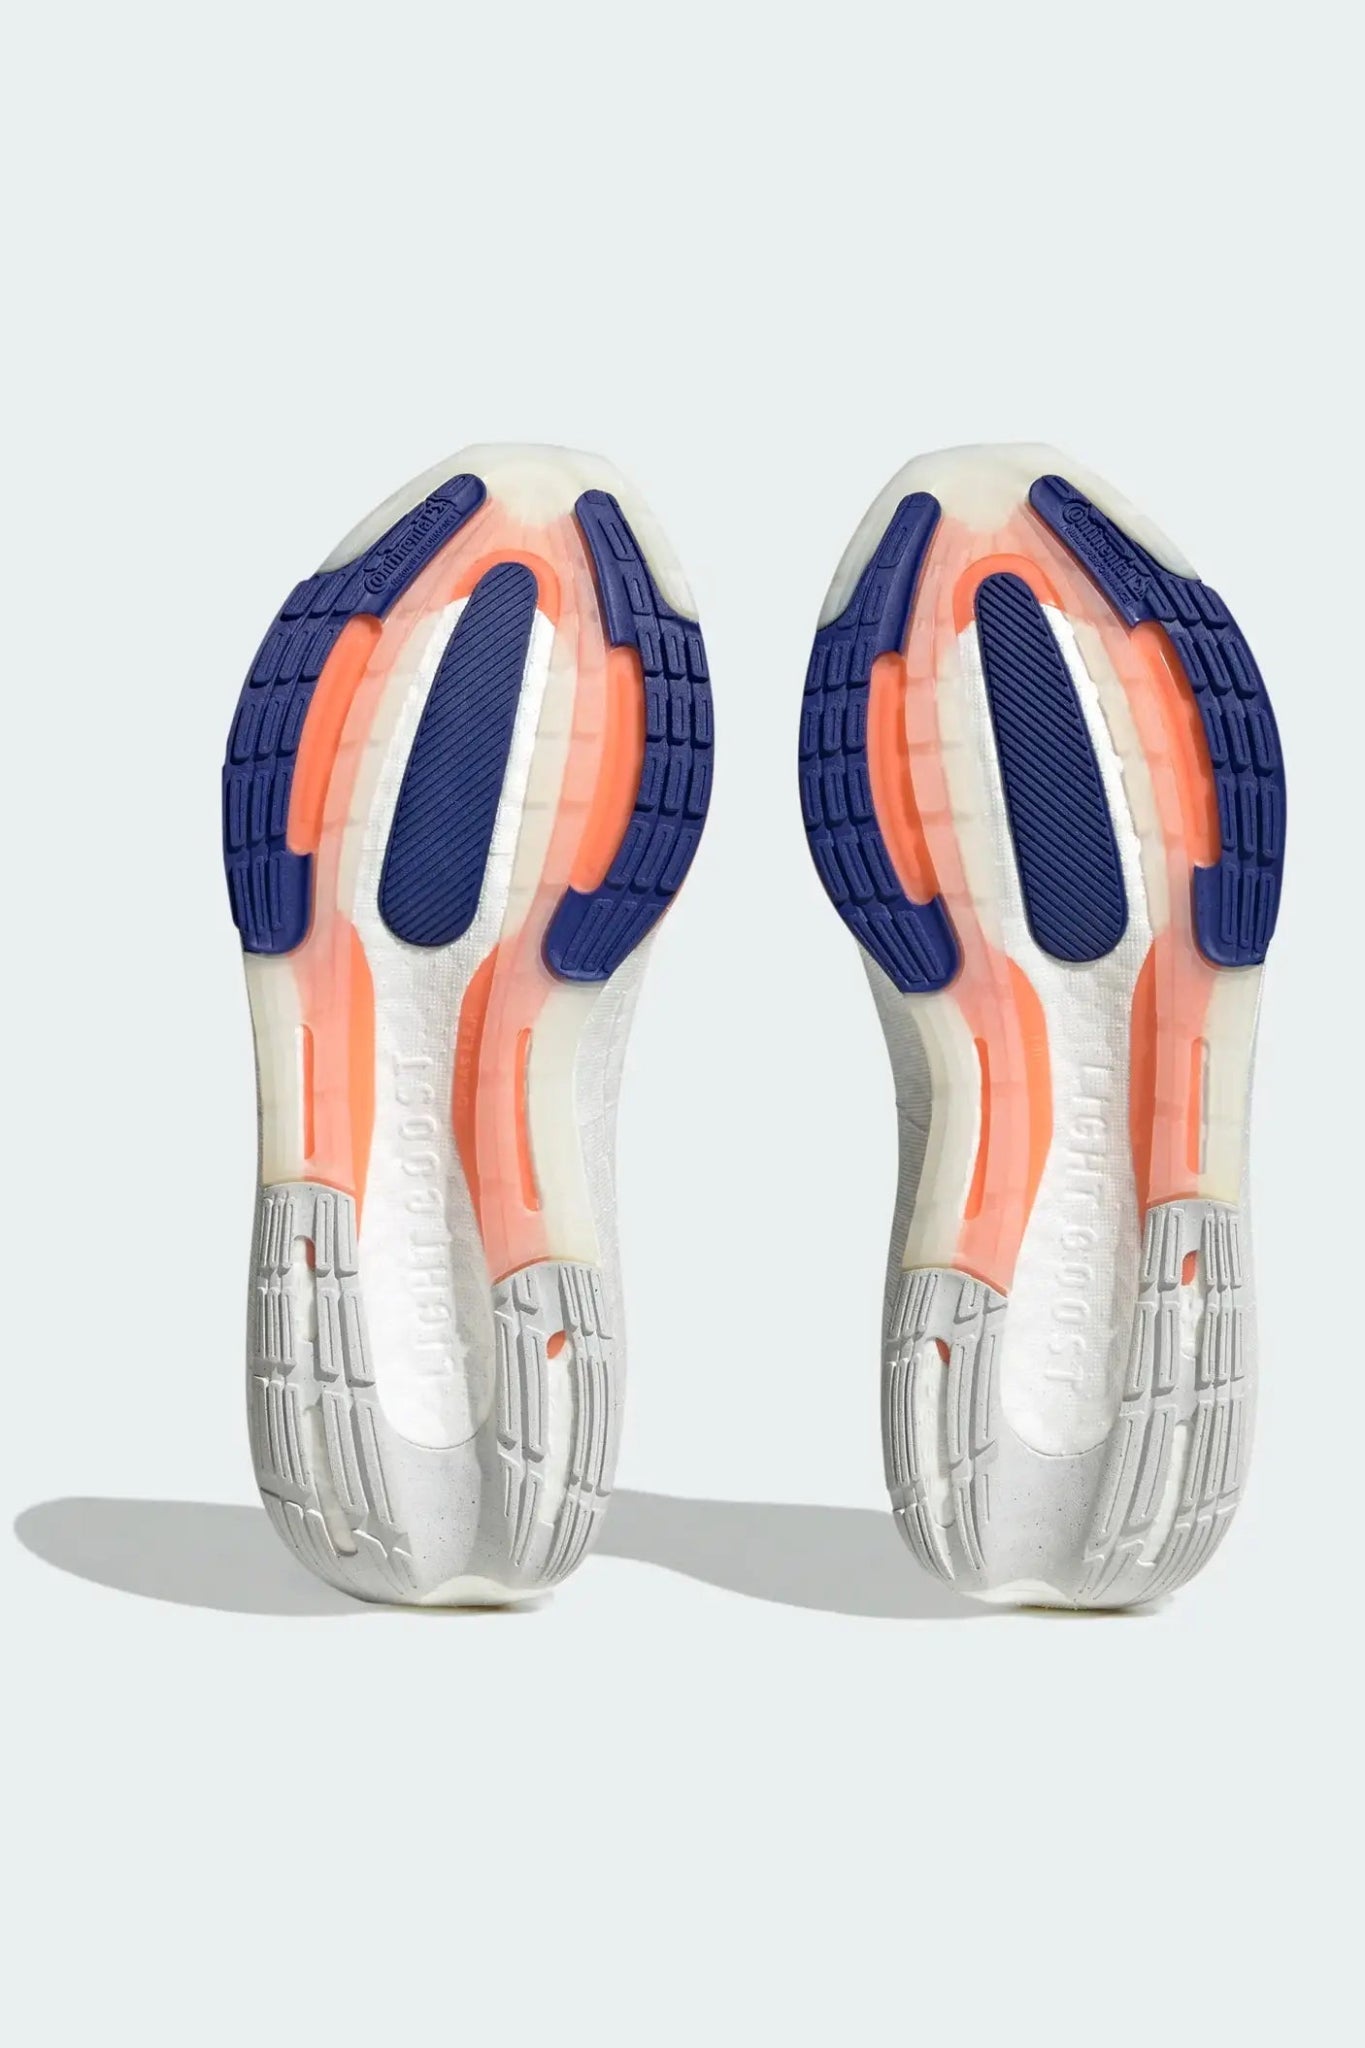 ADIDAS - נעלי ספורט לגבר ULTRABOOST LIGHT בצבע כחול - MASHBIR//365